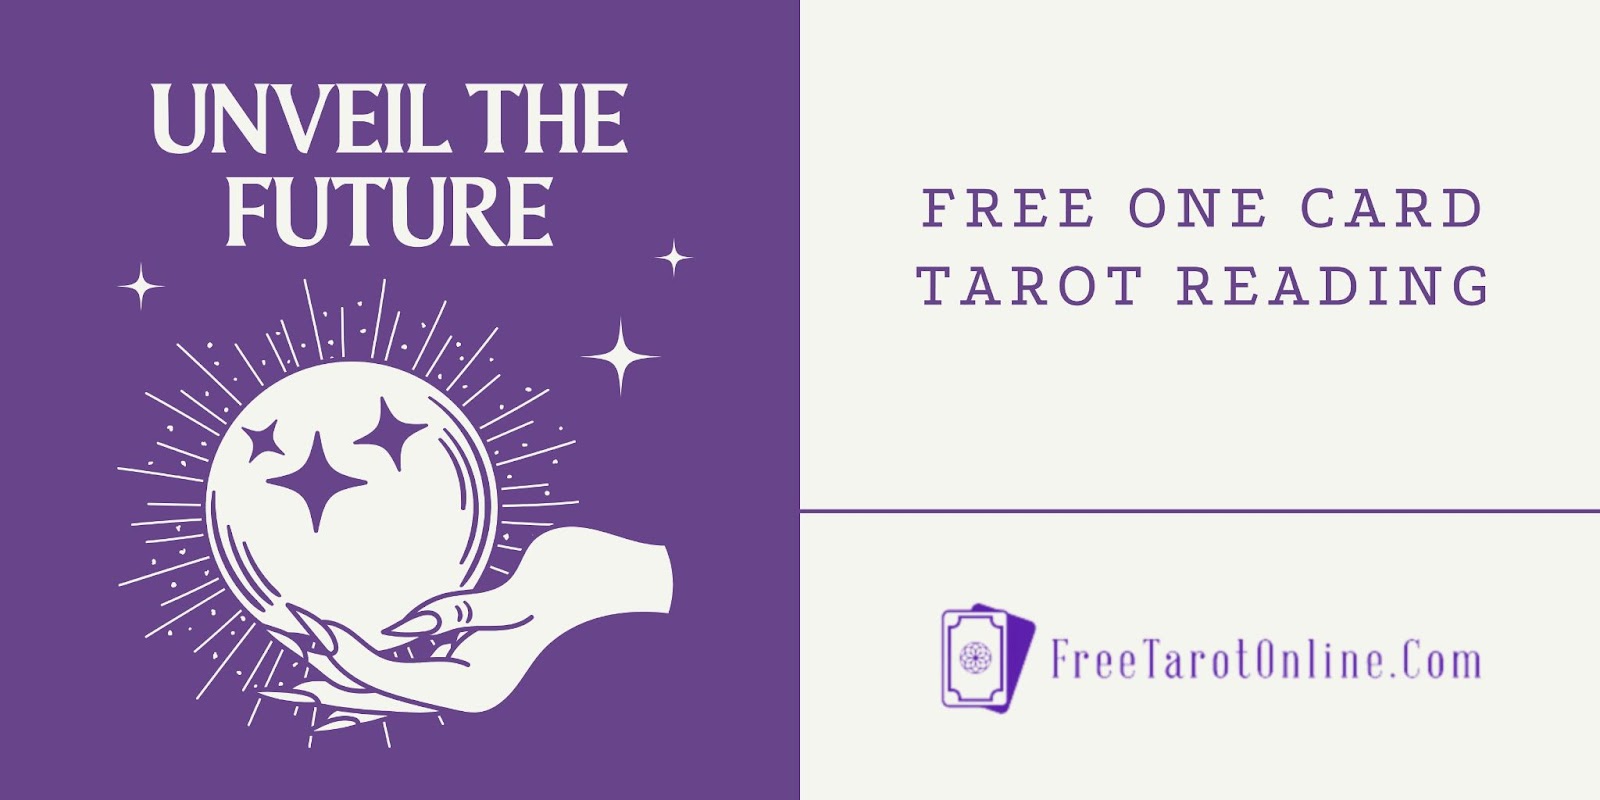 Free One card tarot reading - Free Tarot Online